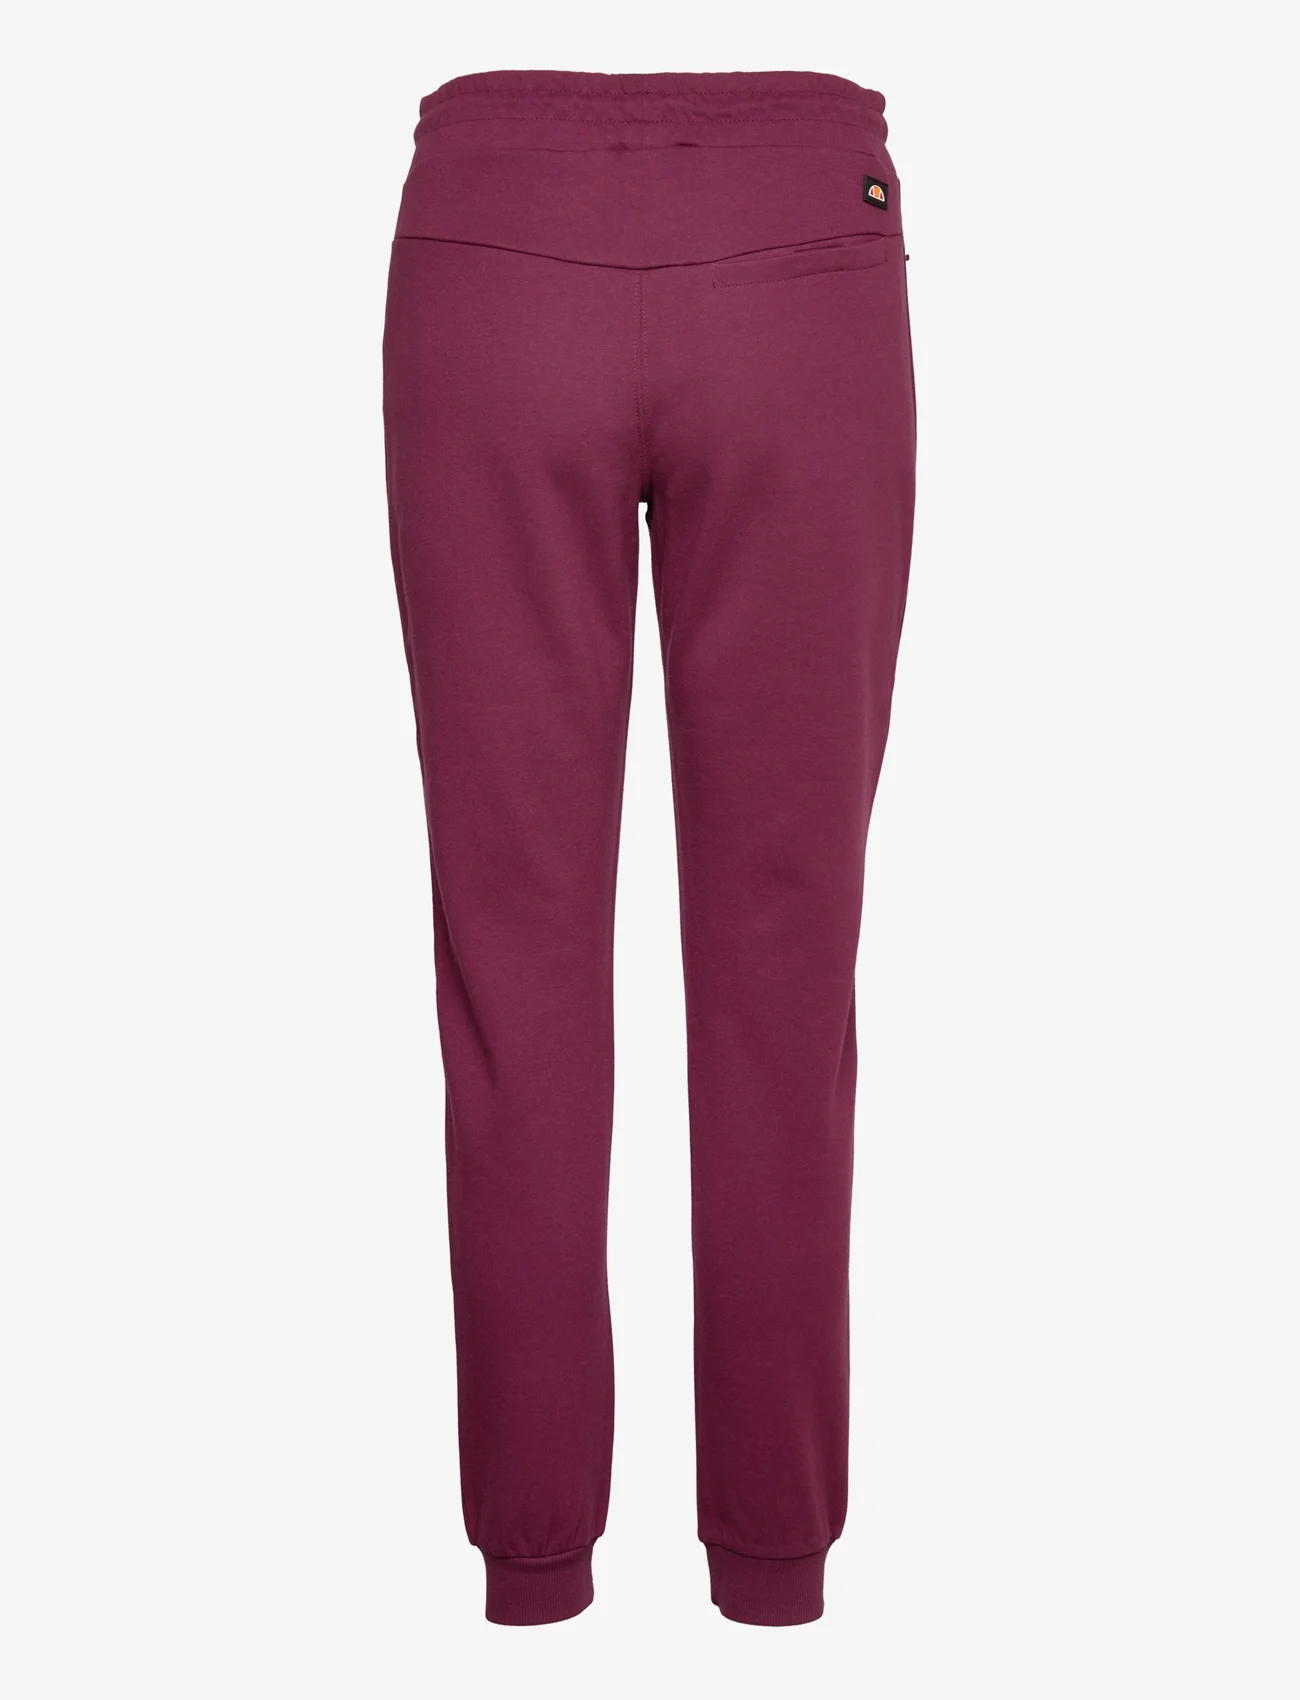 Ellesse - EL TERMINILLO JOG PANT - spodnie dresowe - dark purple - 1